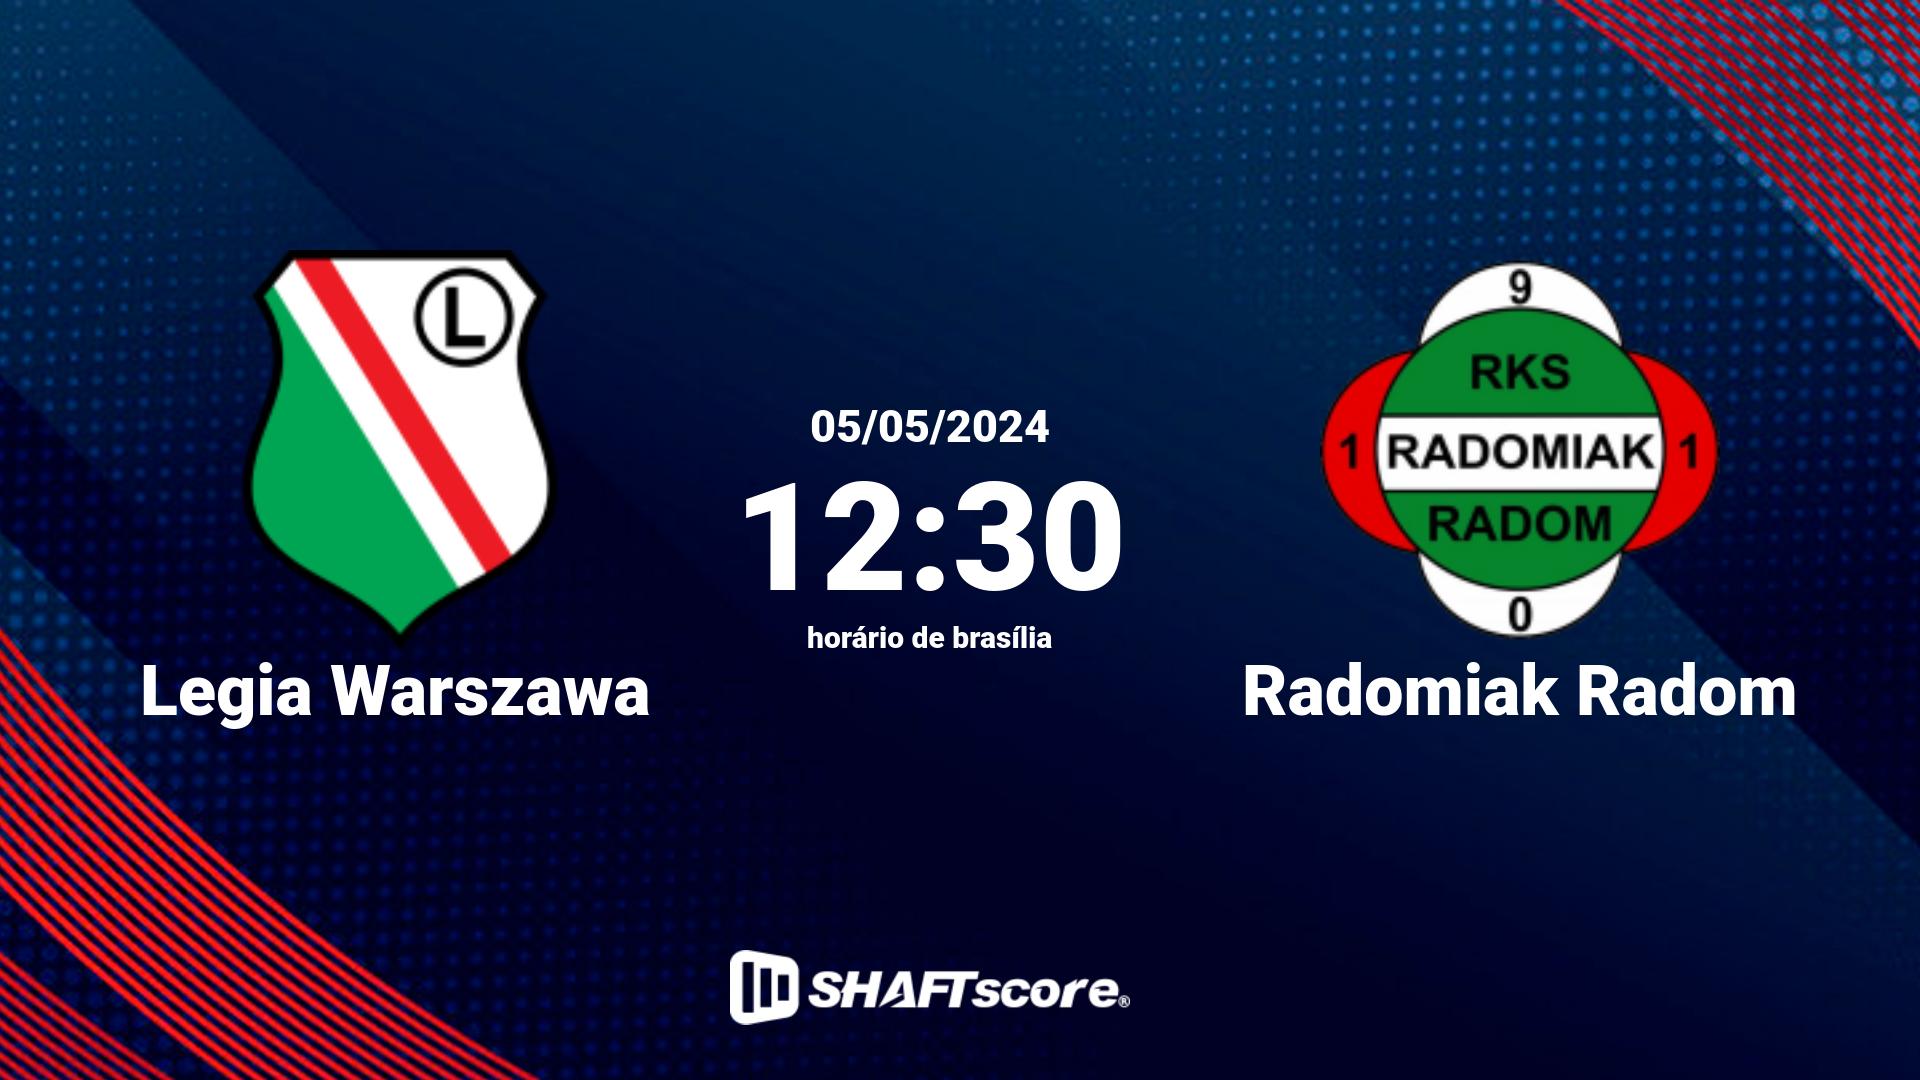 Estatísticas do jogo Legia Warszawa vs Radomiak Radom 05.05 12:30